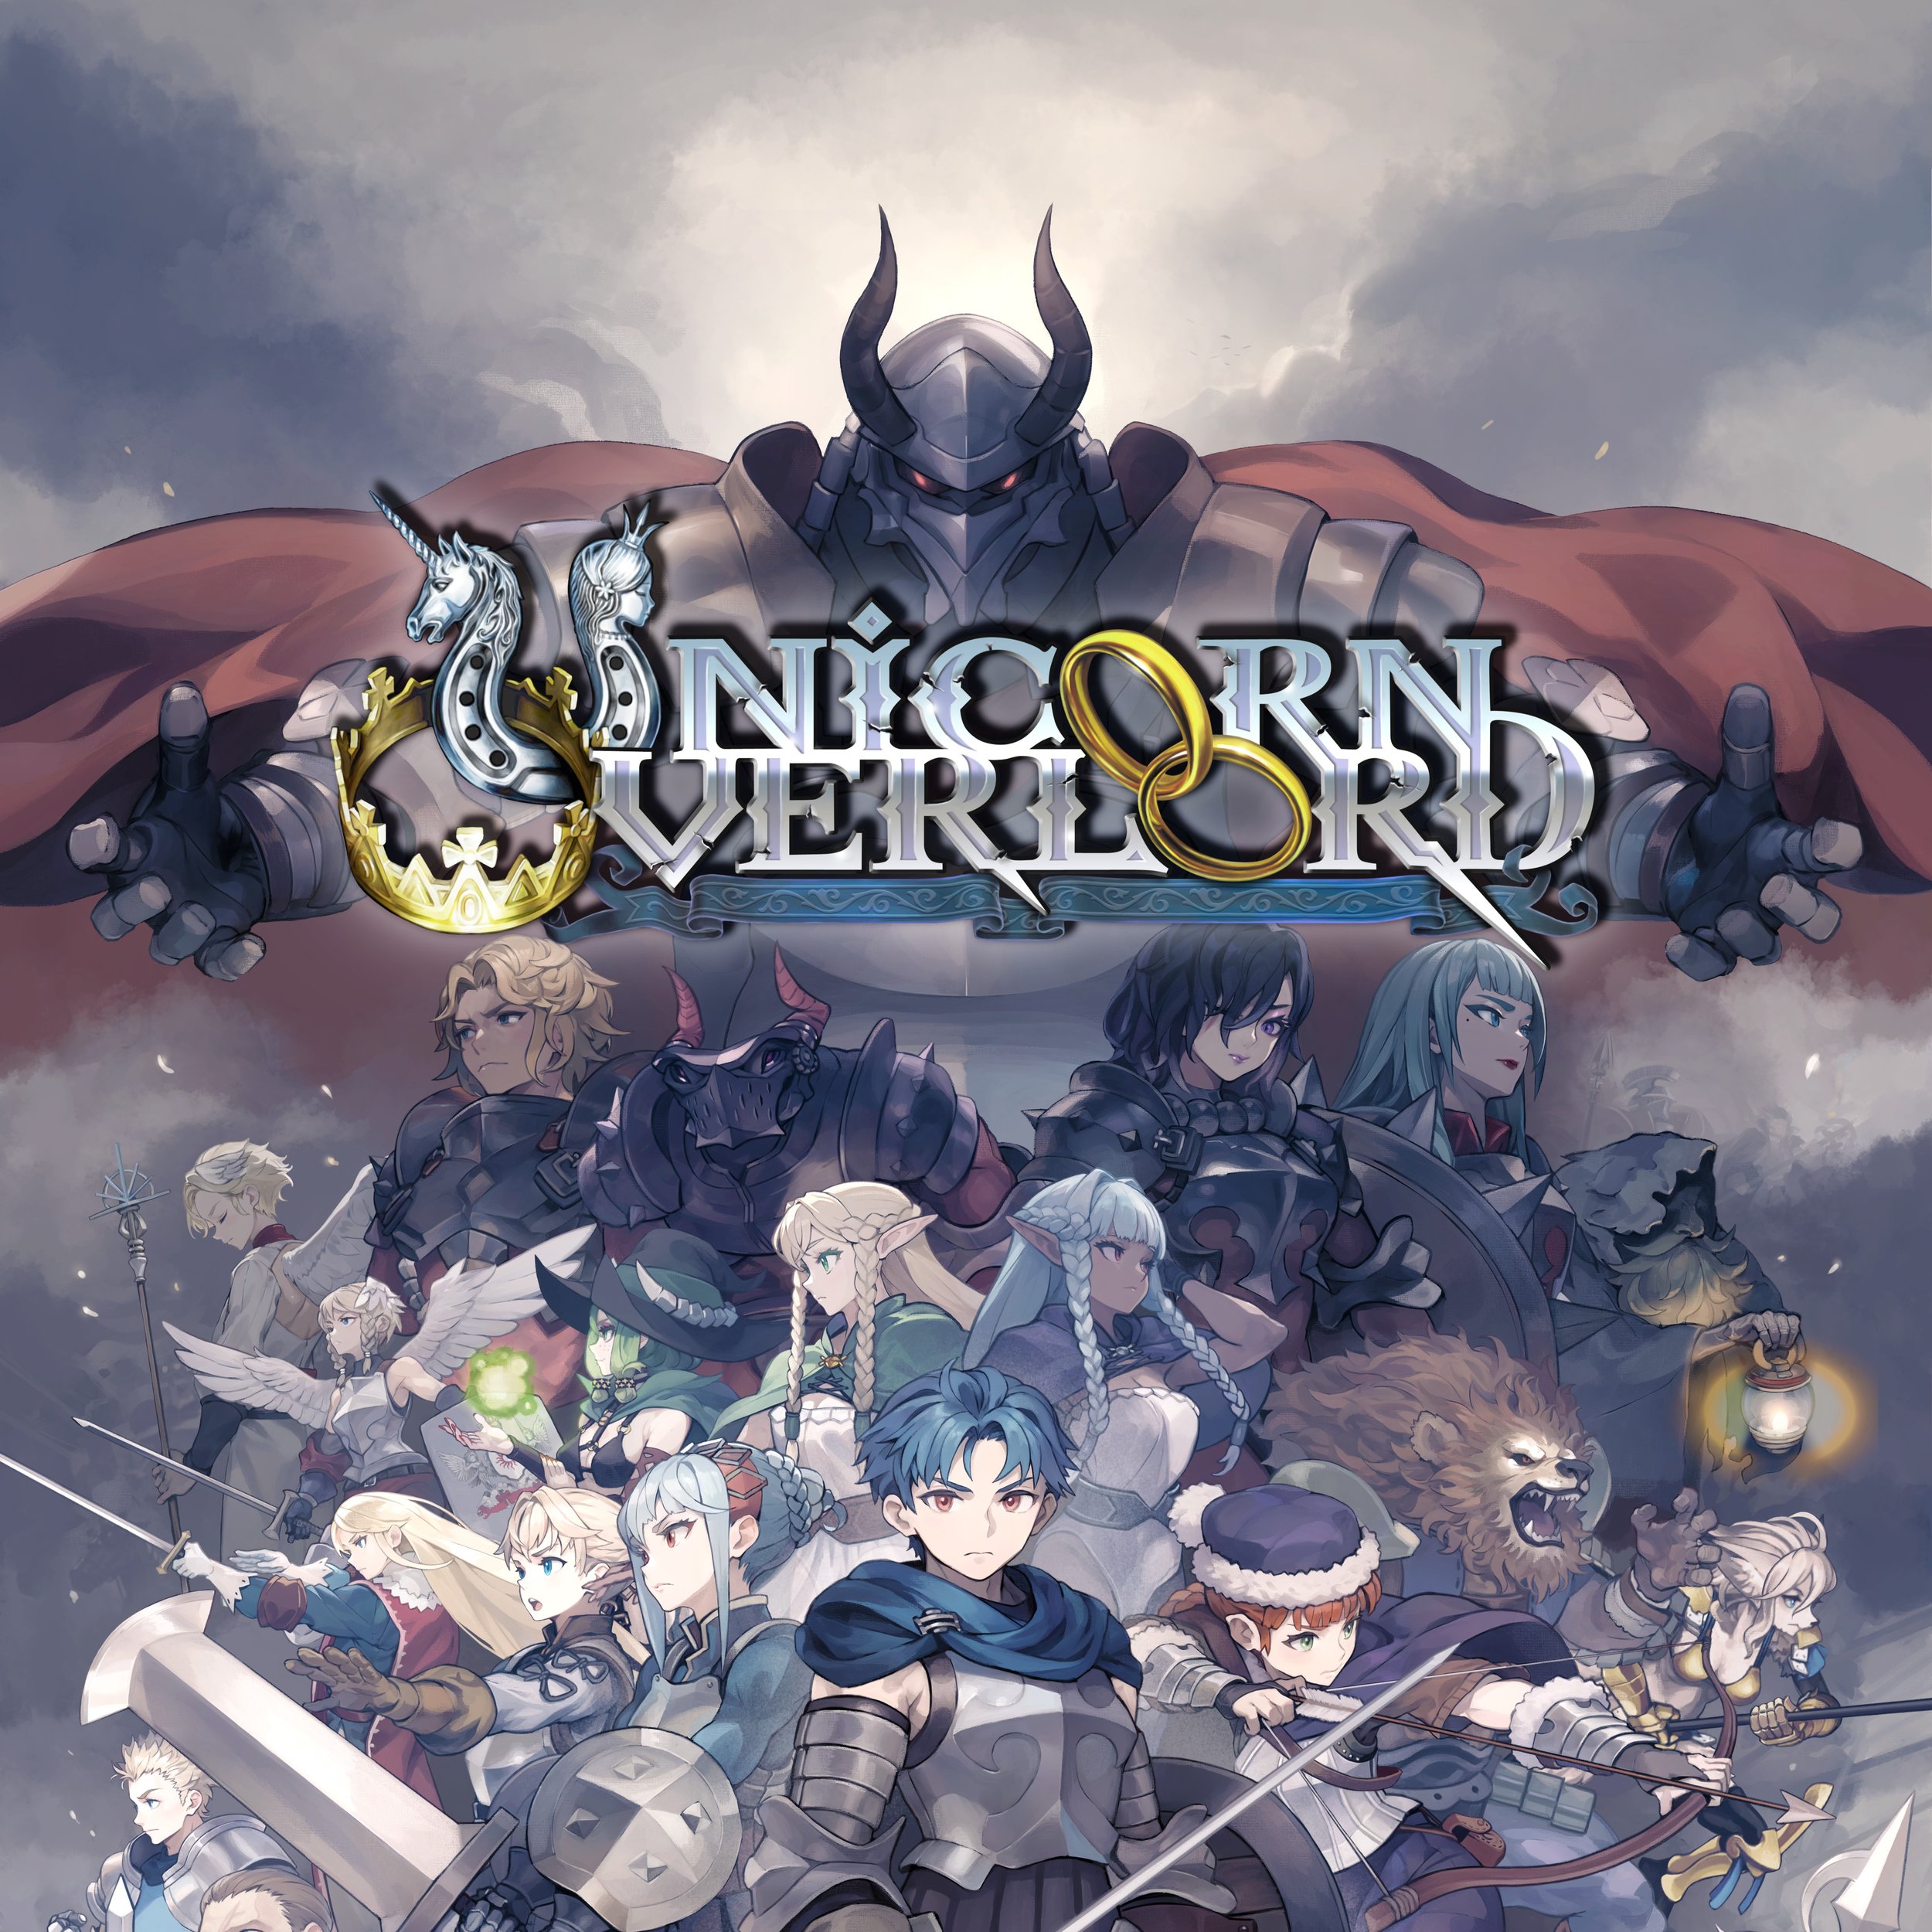 Unicorn+Overlord+Key+Art_Vertical+Edited+2.jpg